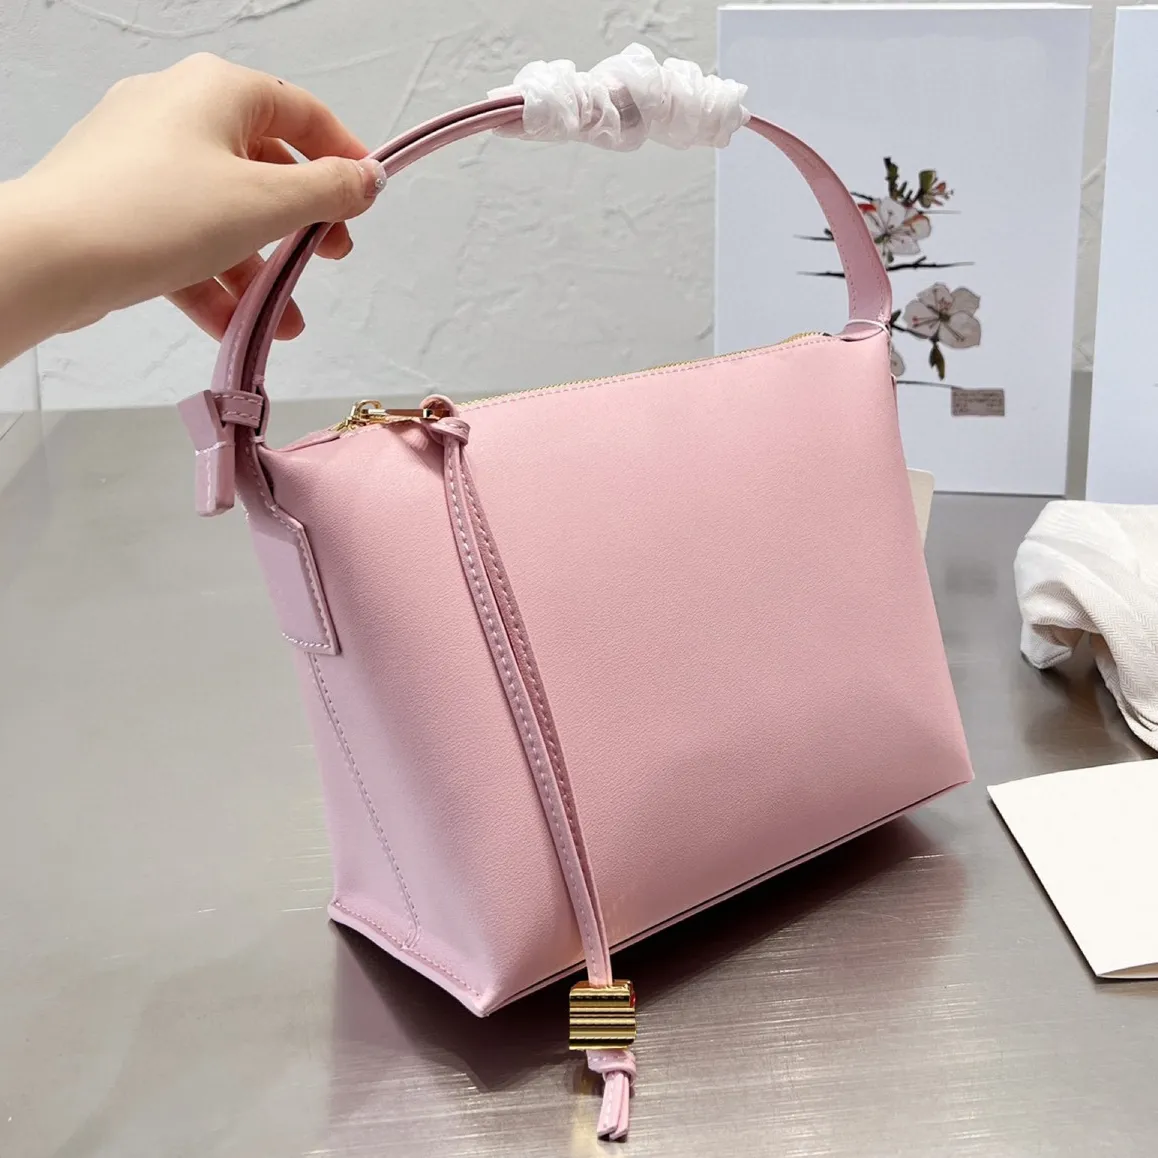 L Brand Designer Pink Tote Facs for Women Brand High Quality Handbag Fashion Classic Large Lady Lady Lady Lold Handbags Totes 230711